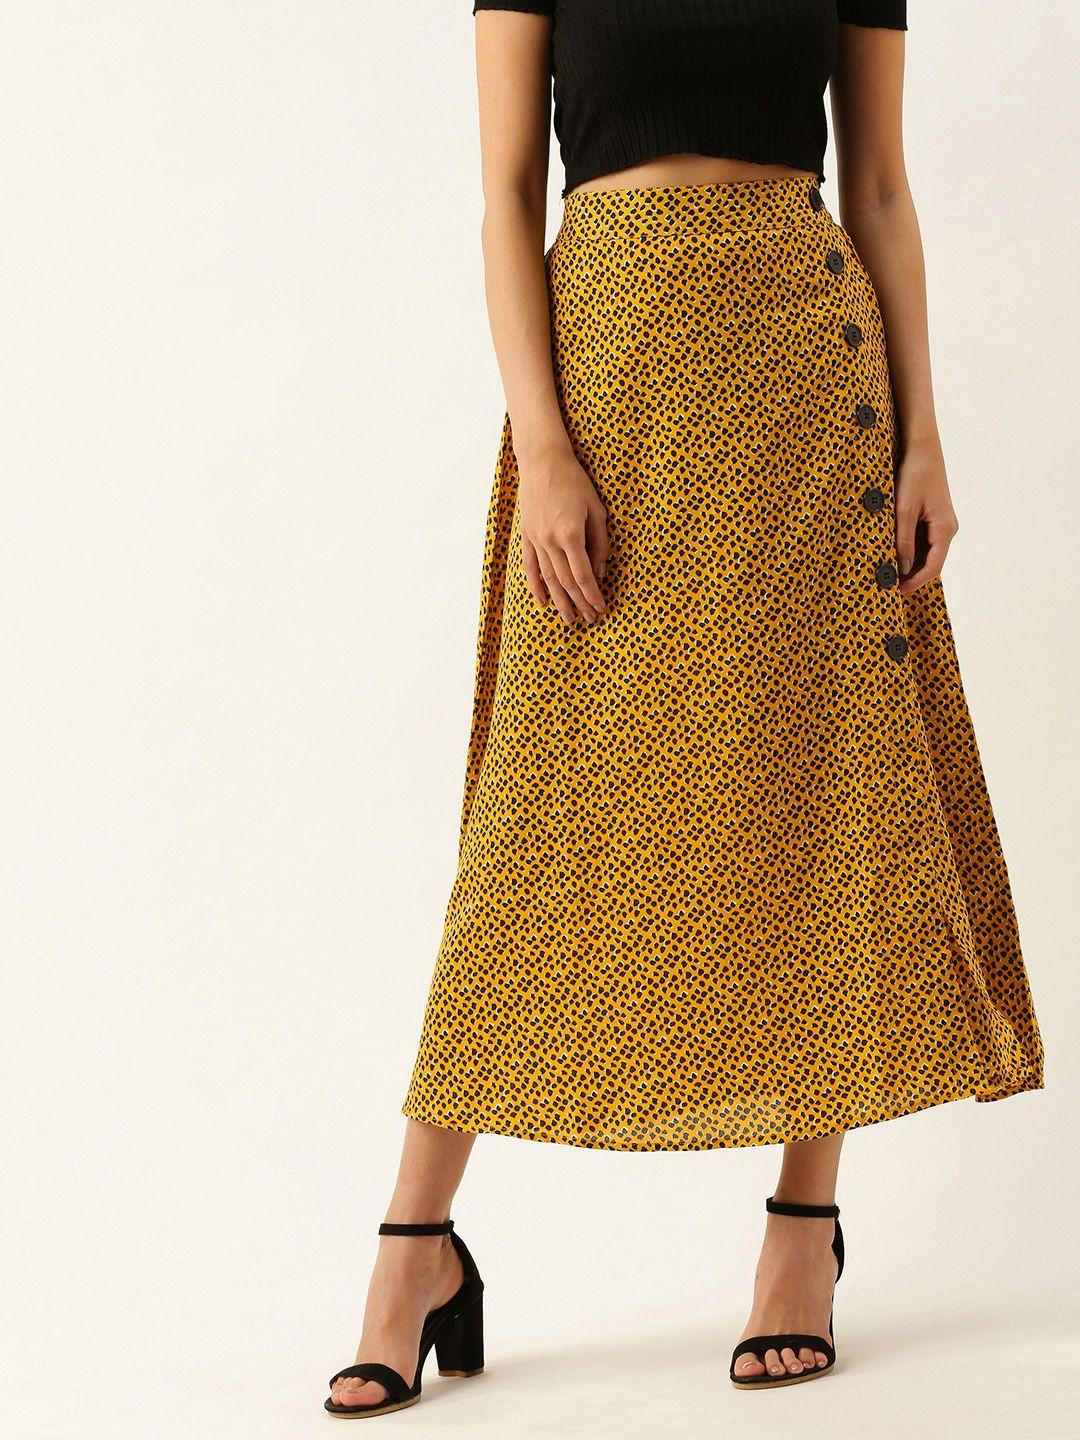 berrylush women mustard yellow & black animal printed a-line skirt